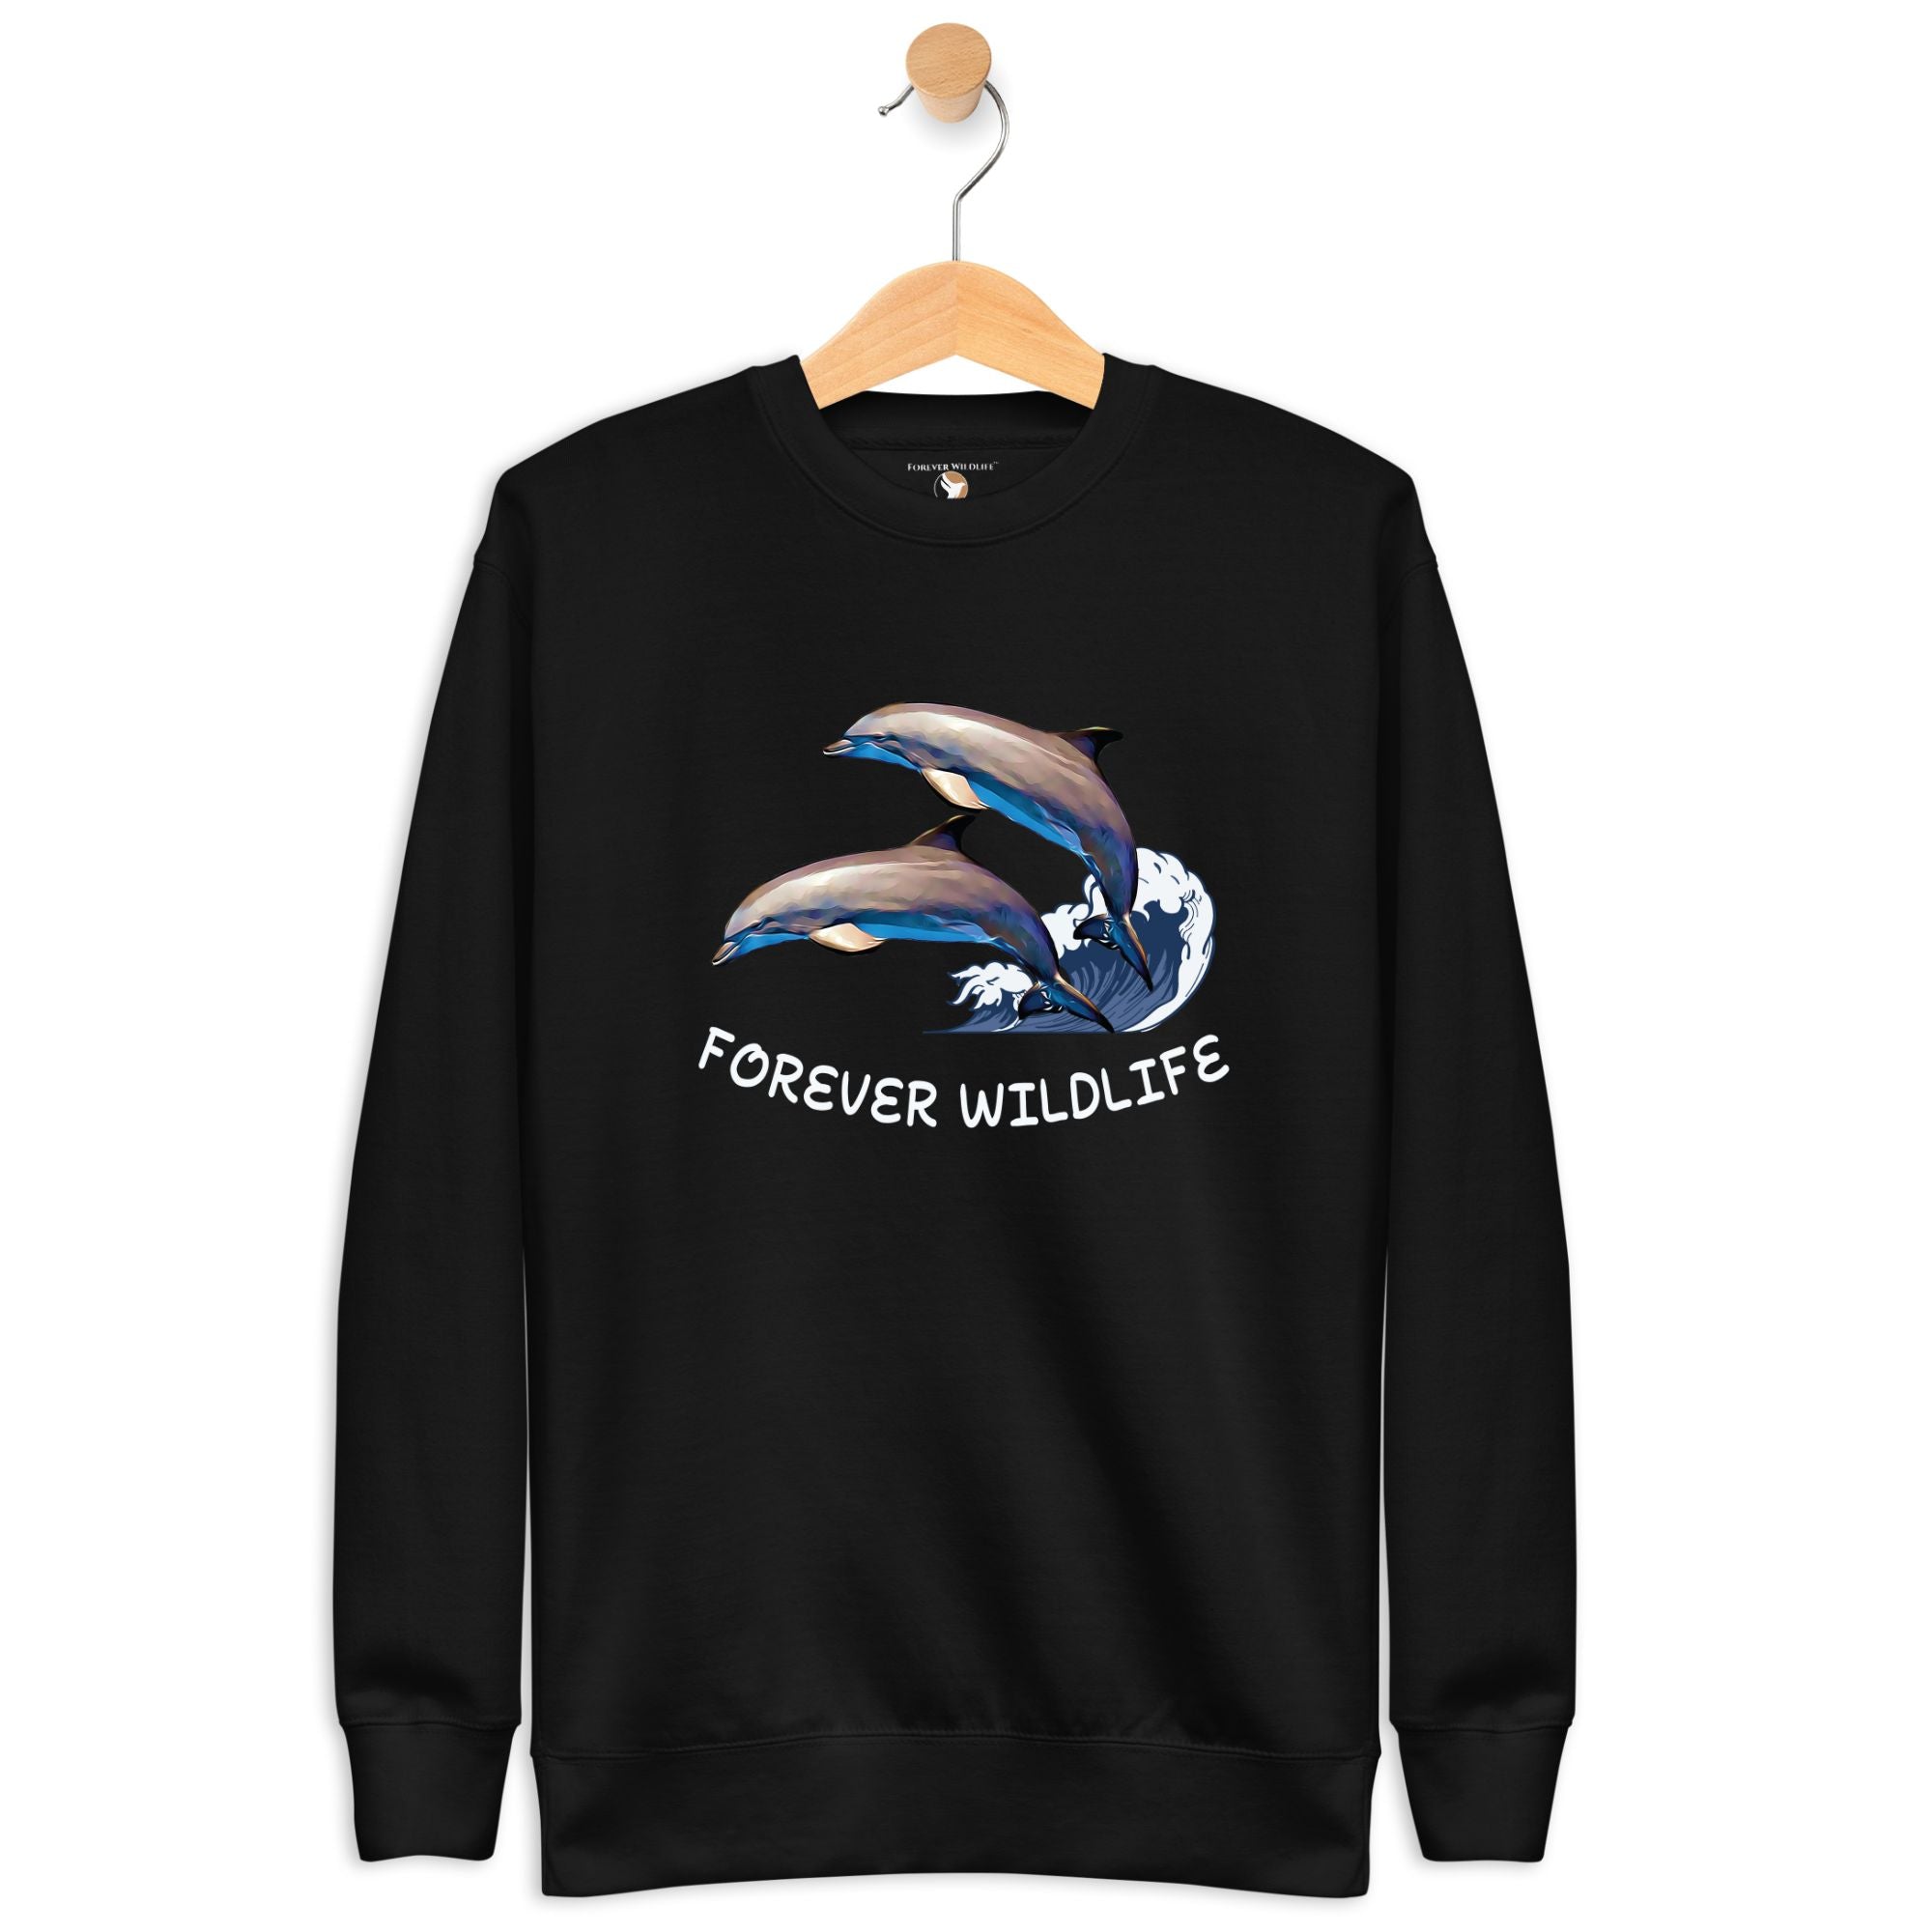 Dolphin Sweatshirt in Black-Premium Wildlife Animal Inspiration Sweatshirt Design, part of Wildlife Sweatshirts & Clothing from Forever Wildlife.